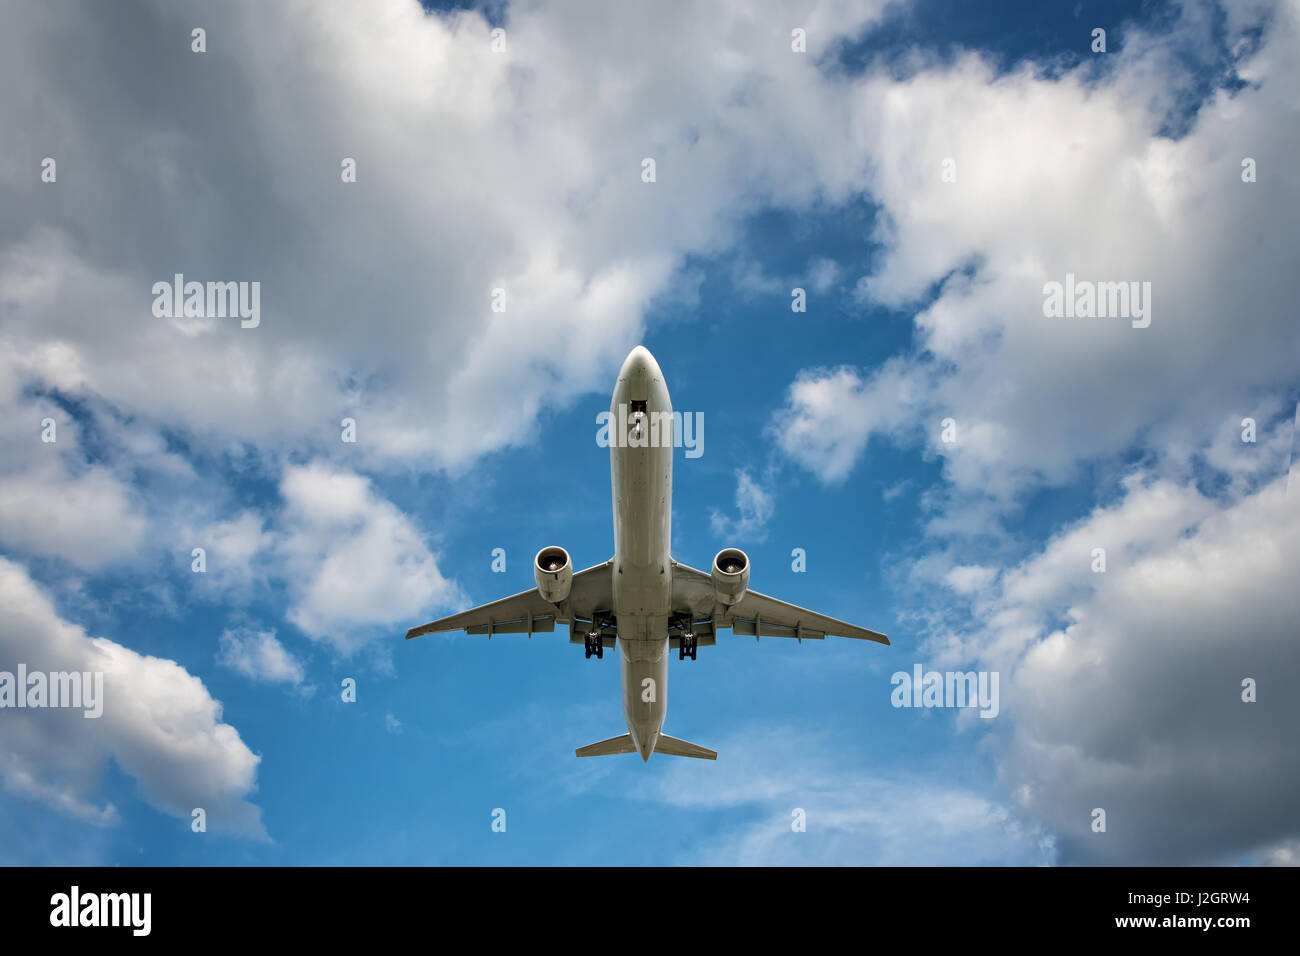 Big jet piano blu su sfondo con cielo nuvoloso Foto Stock